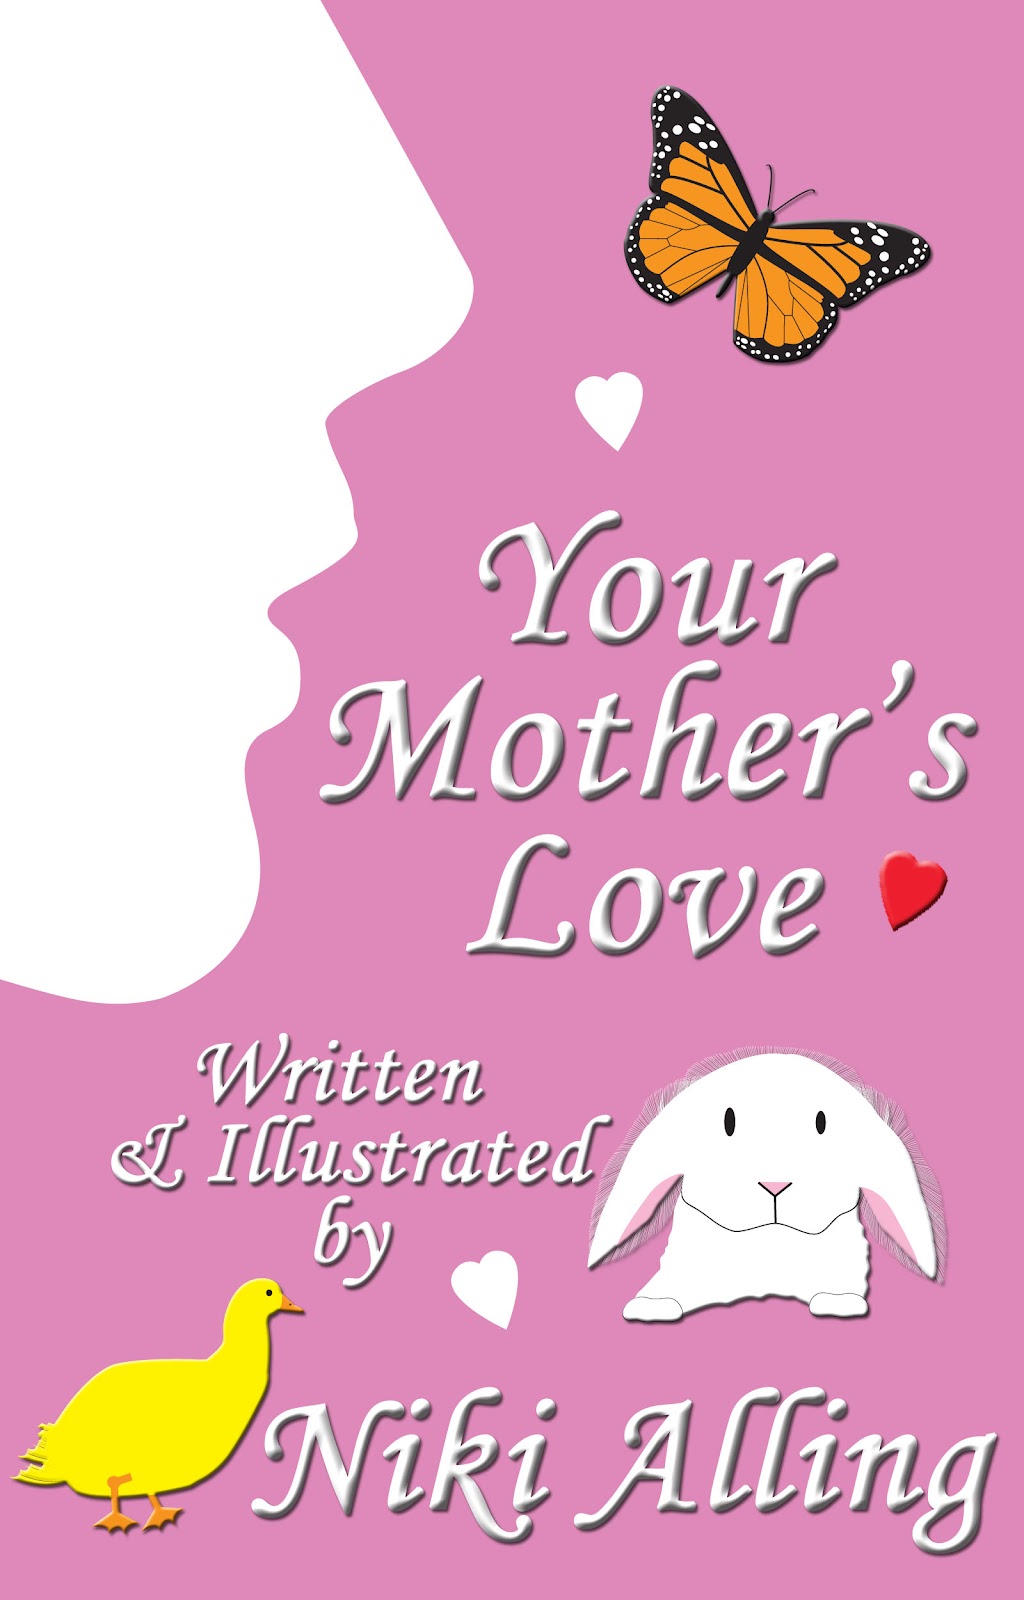 http://www.amazon.com/Your-Mothers-Love-Parents-ebook/dp/B007XL0E0U/ref=tmm_kin_swatch_0?_encoding=UTF8&sr=1-7&qid=1430449759